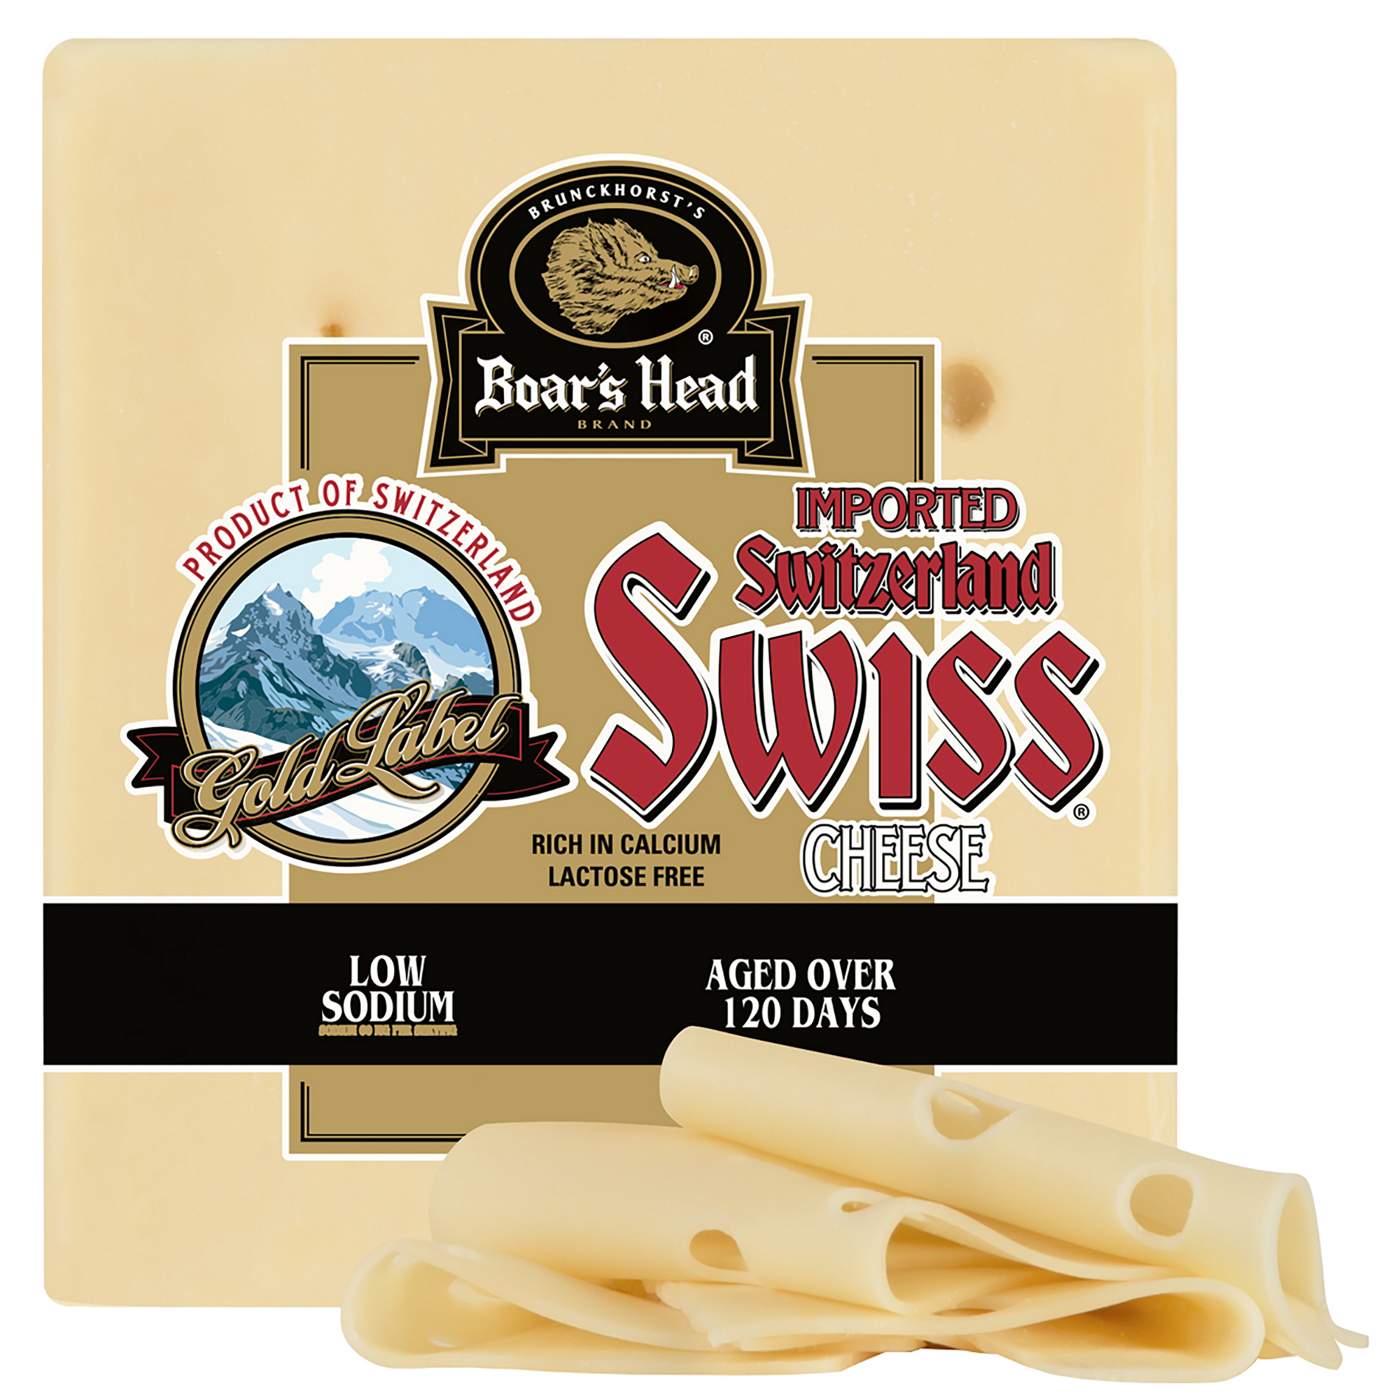 Boar's Head Imported Switzerland Swiss Cheese, Custom Sliced; image 2 of 2